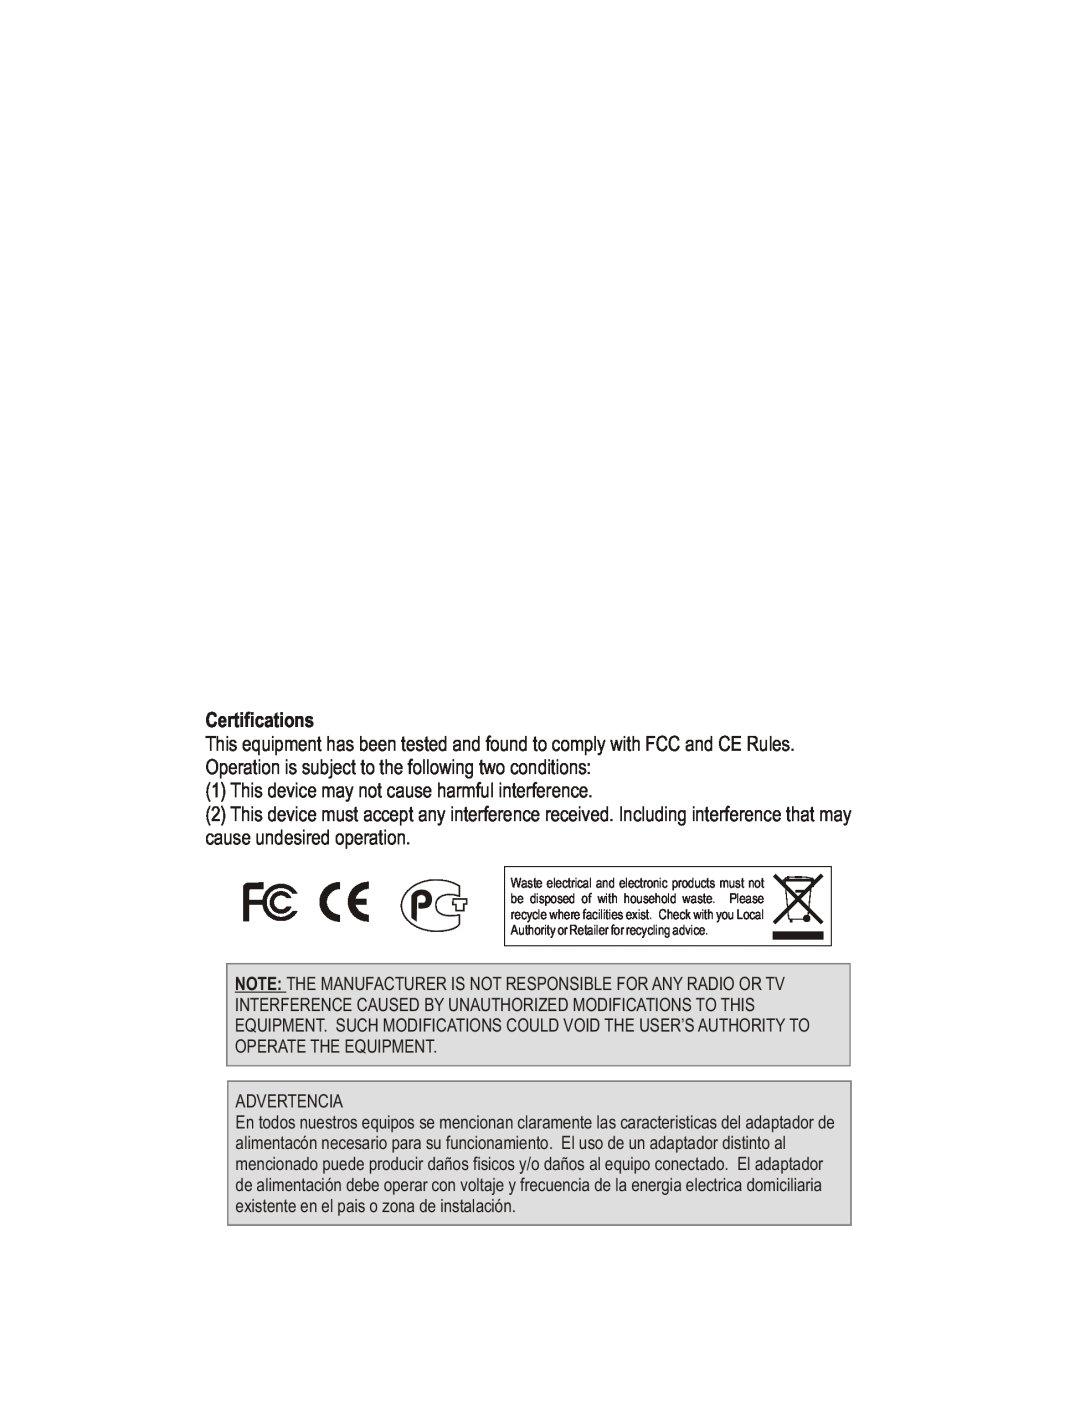 TRENDnet TPE-S44 manual Certifications 